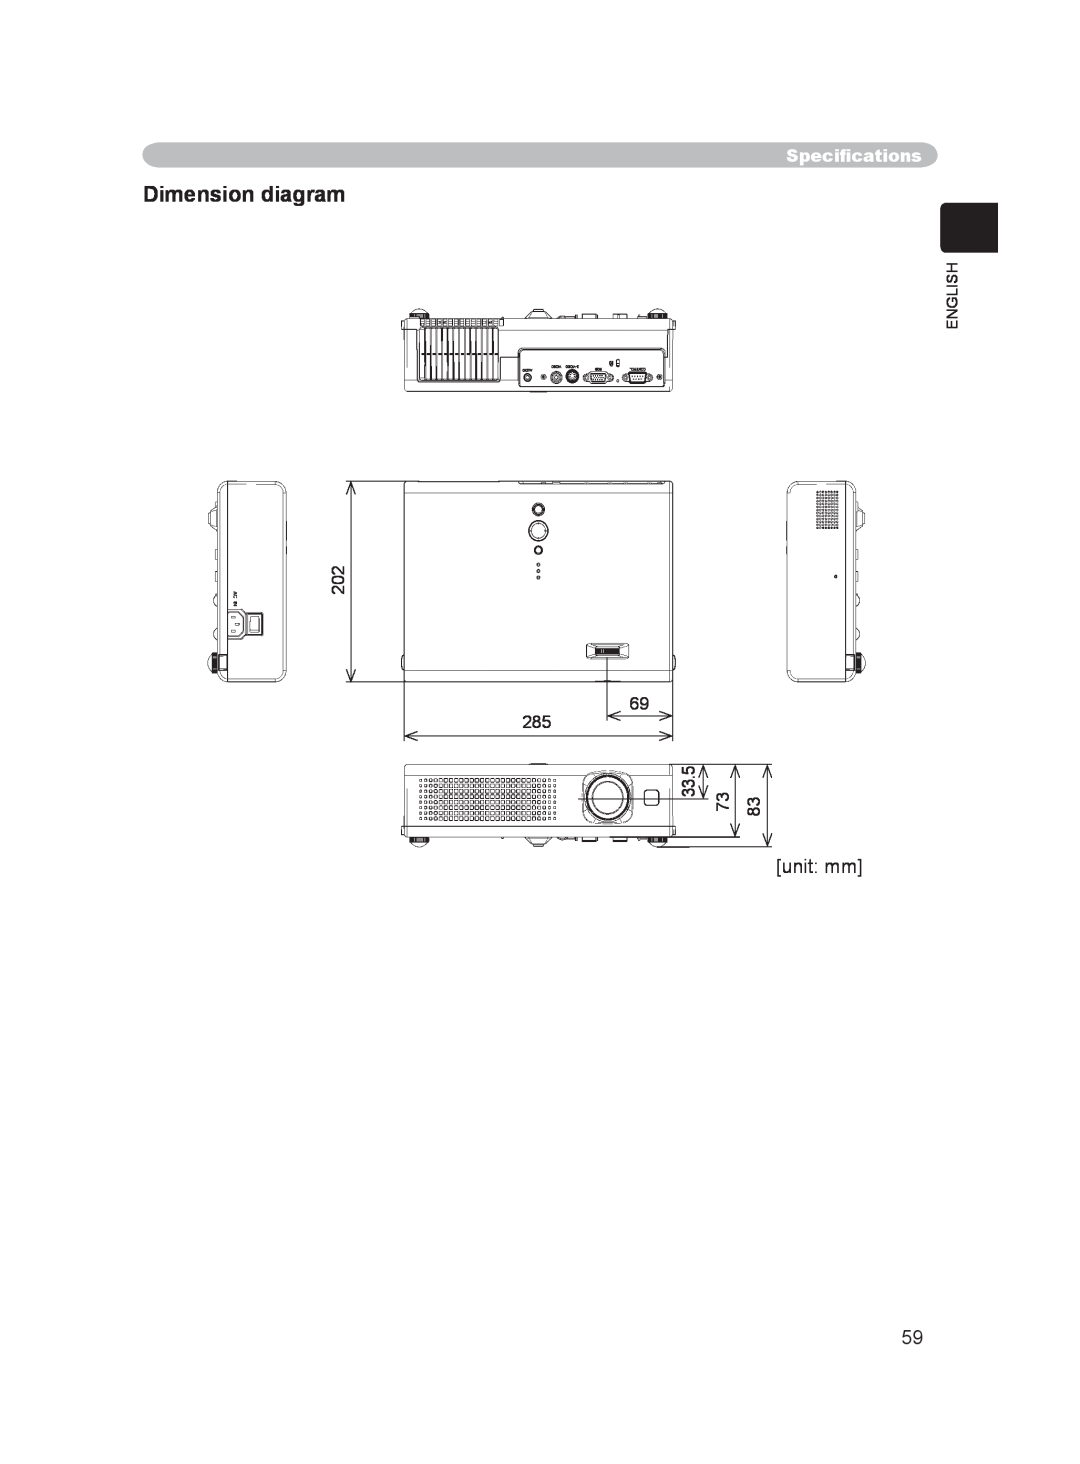 Hitachi PJ-LC9 user manual Dimension diagram, unit mm, Speciﬁcations, 33.5, English 